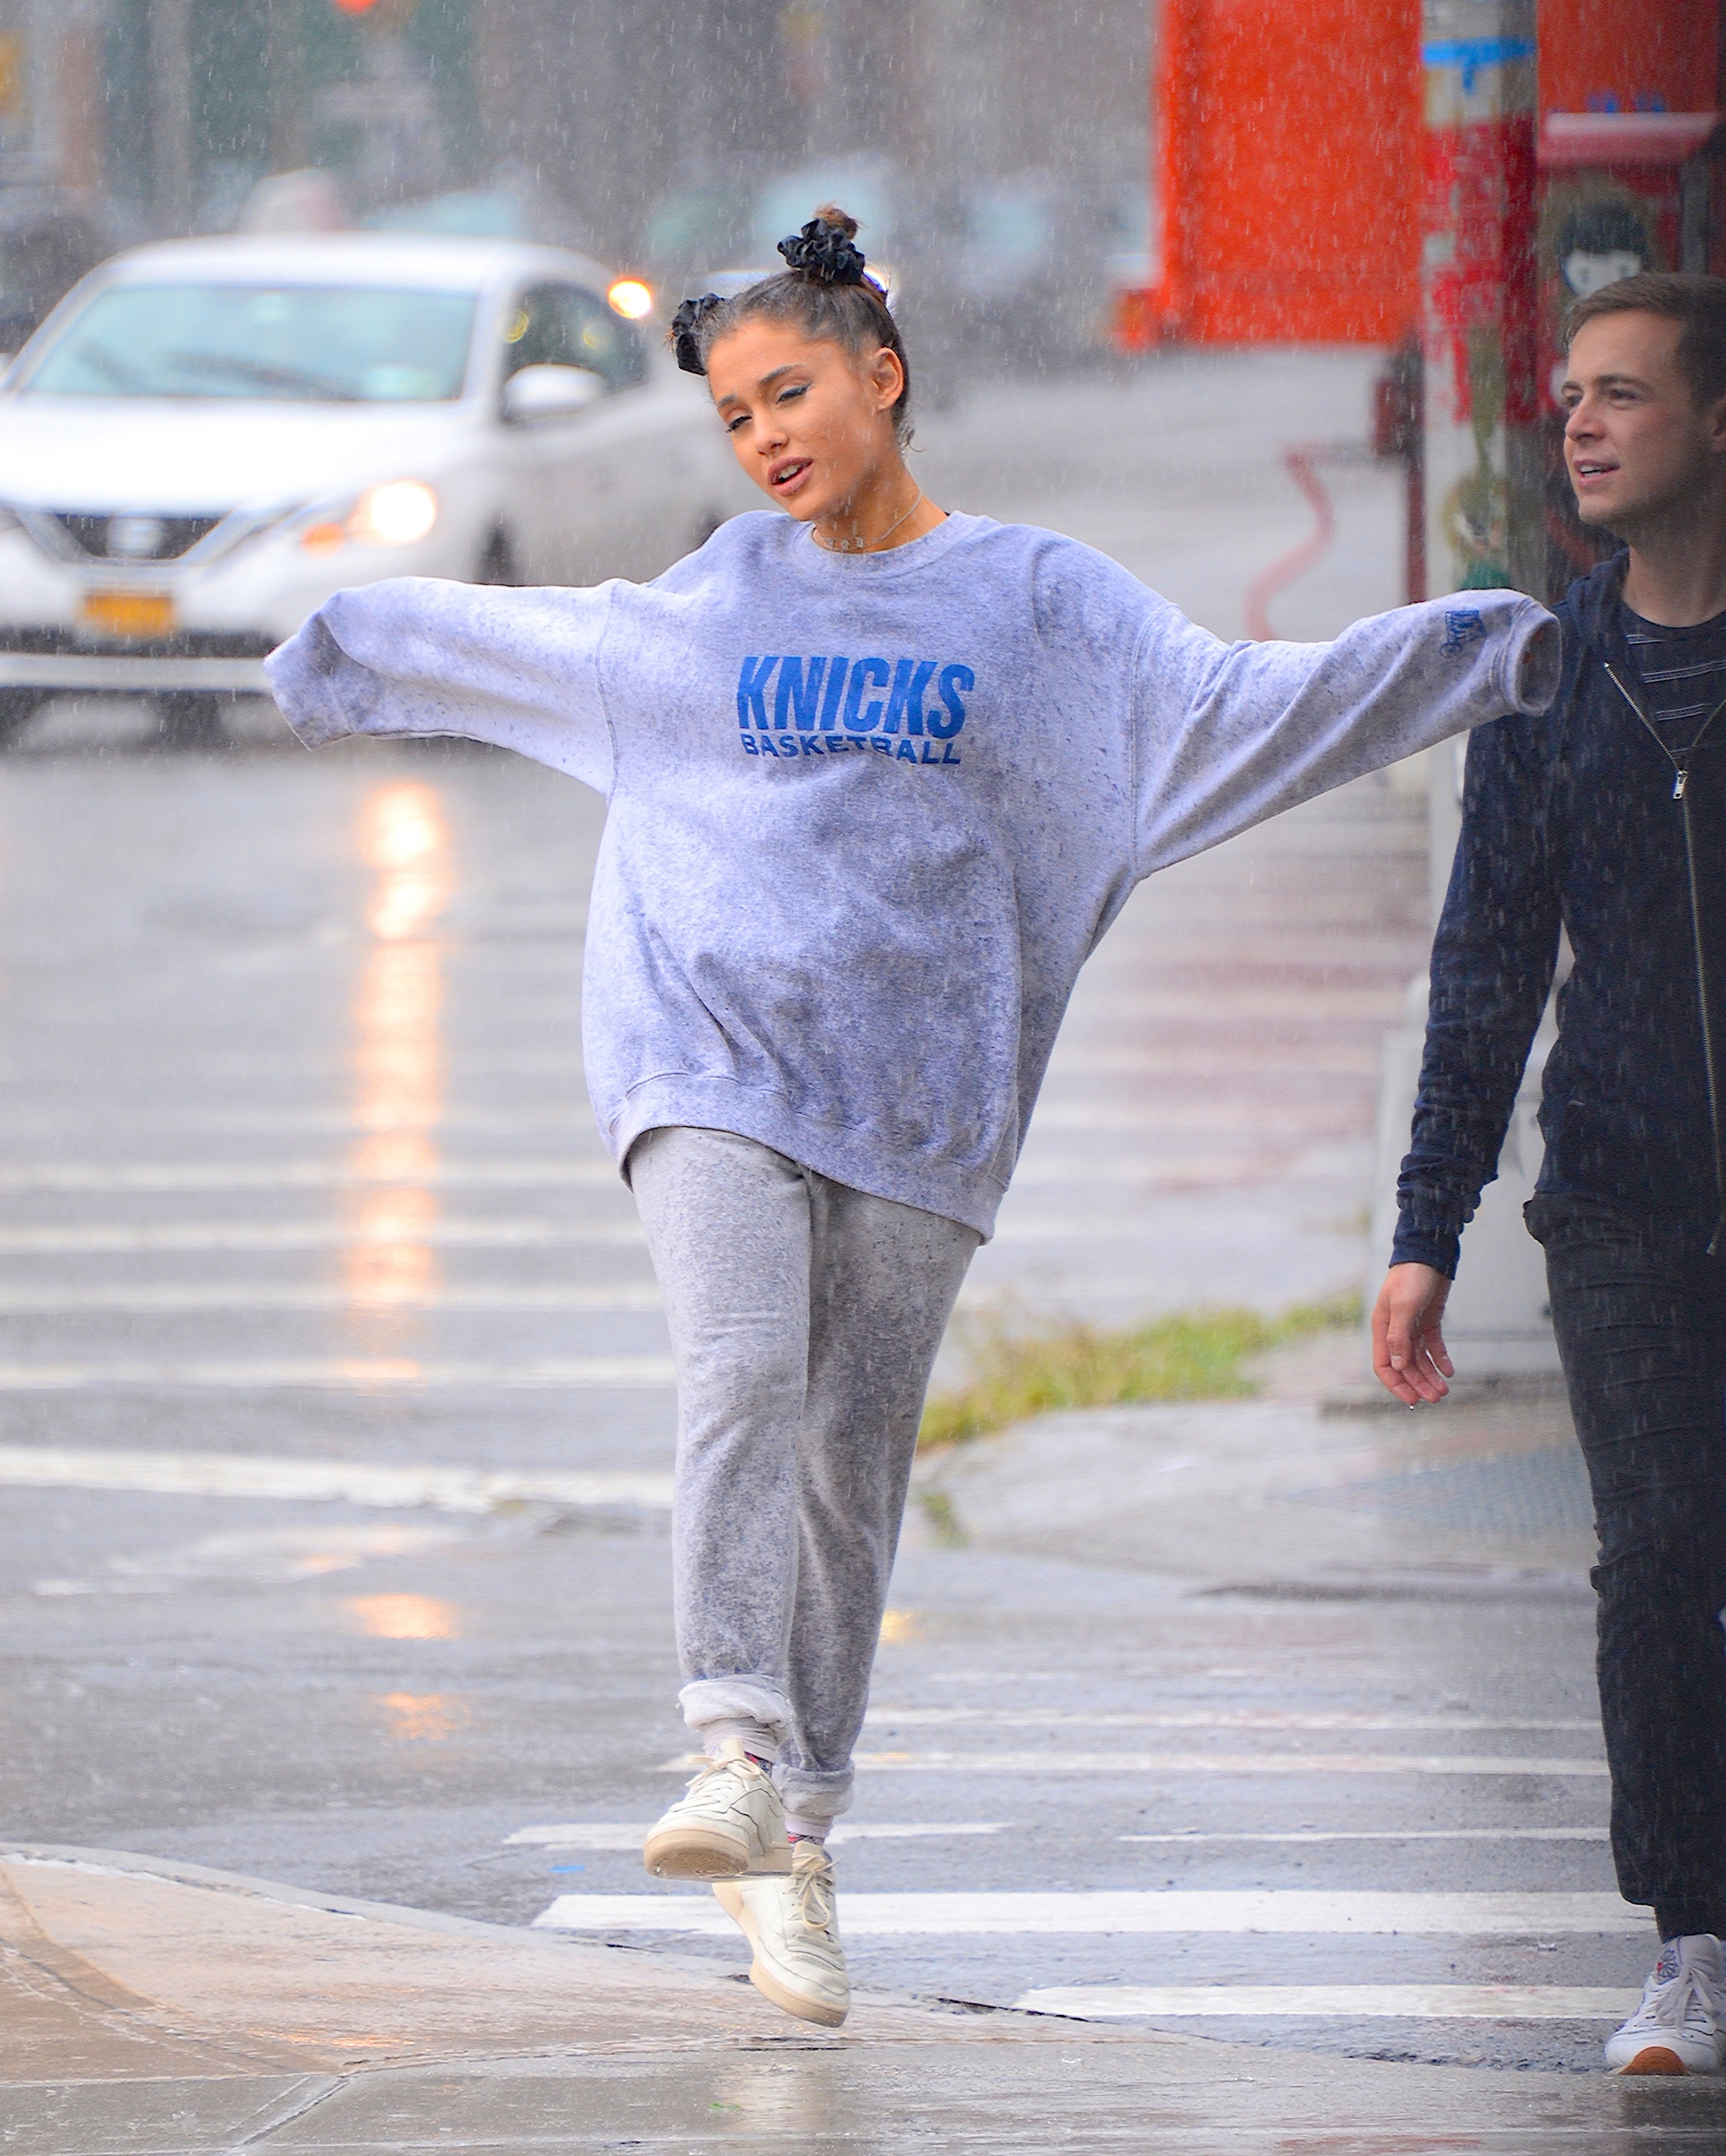 ariana skipping in the rain in a sweats